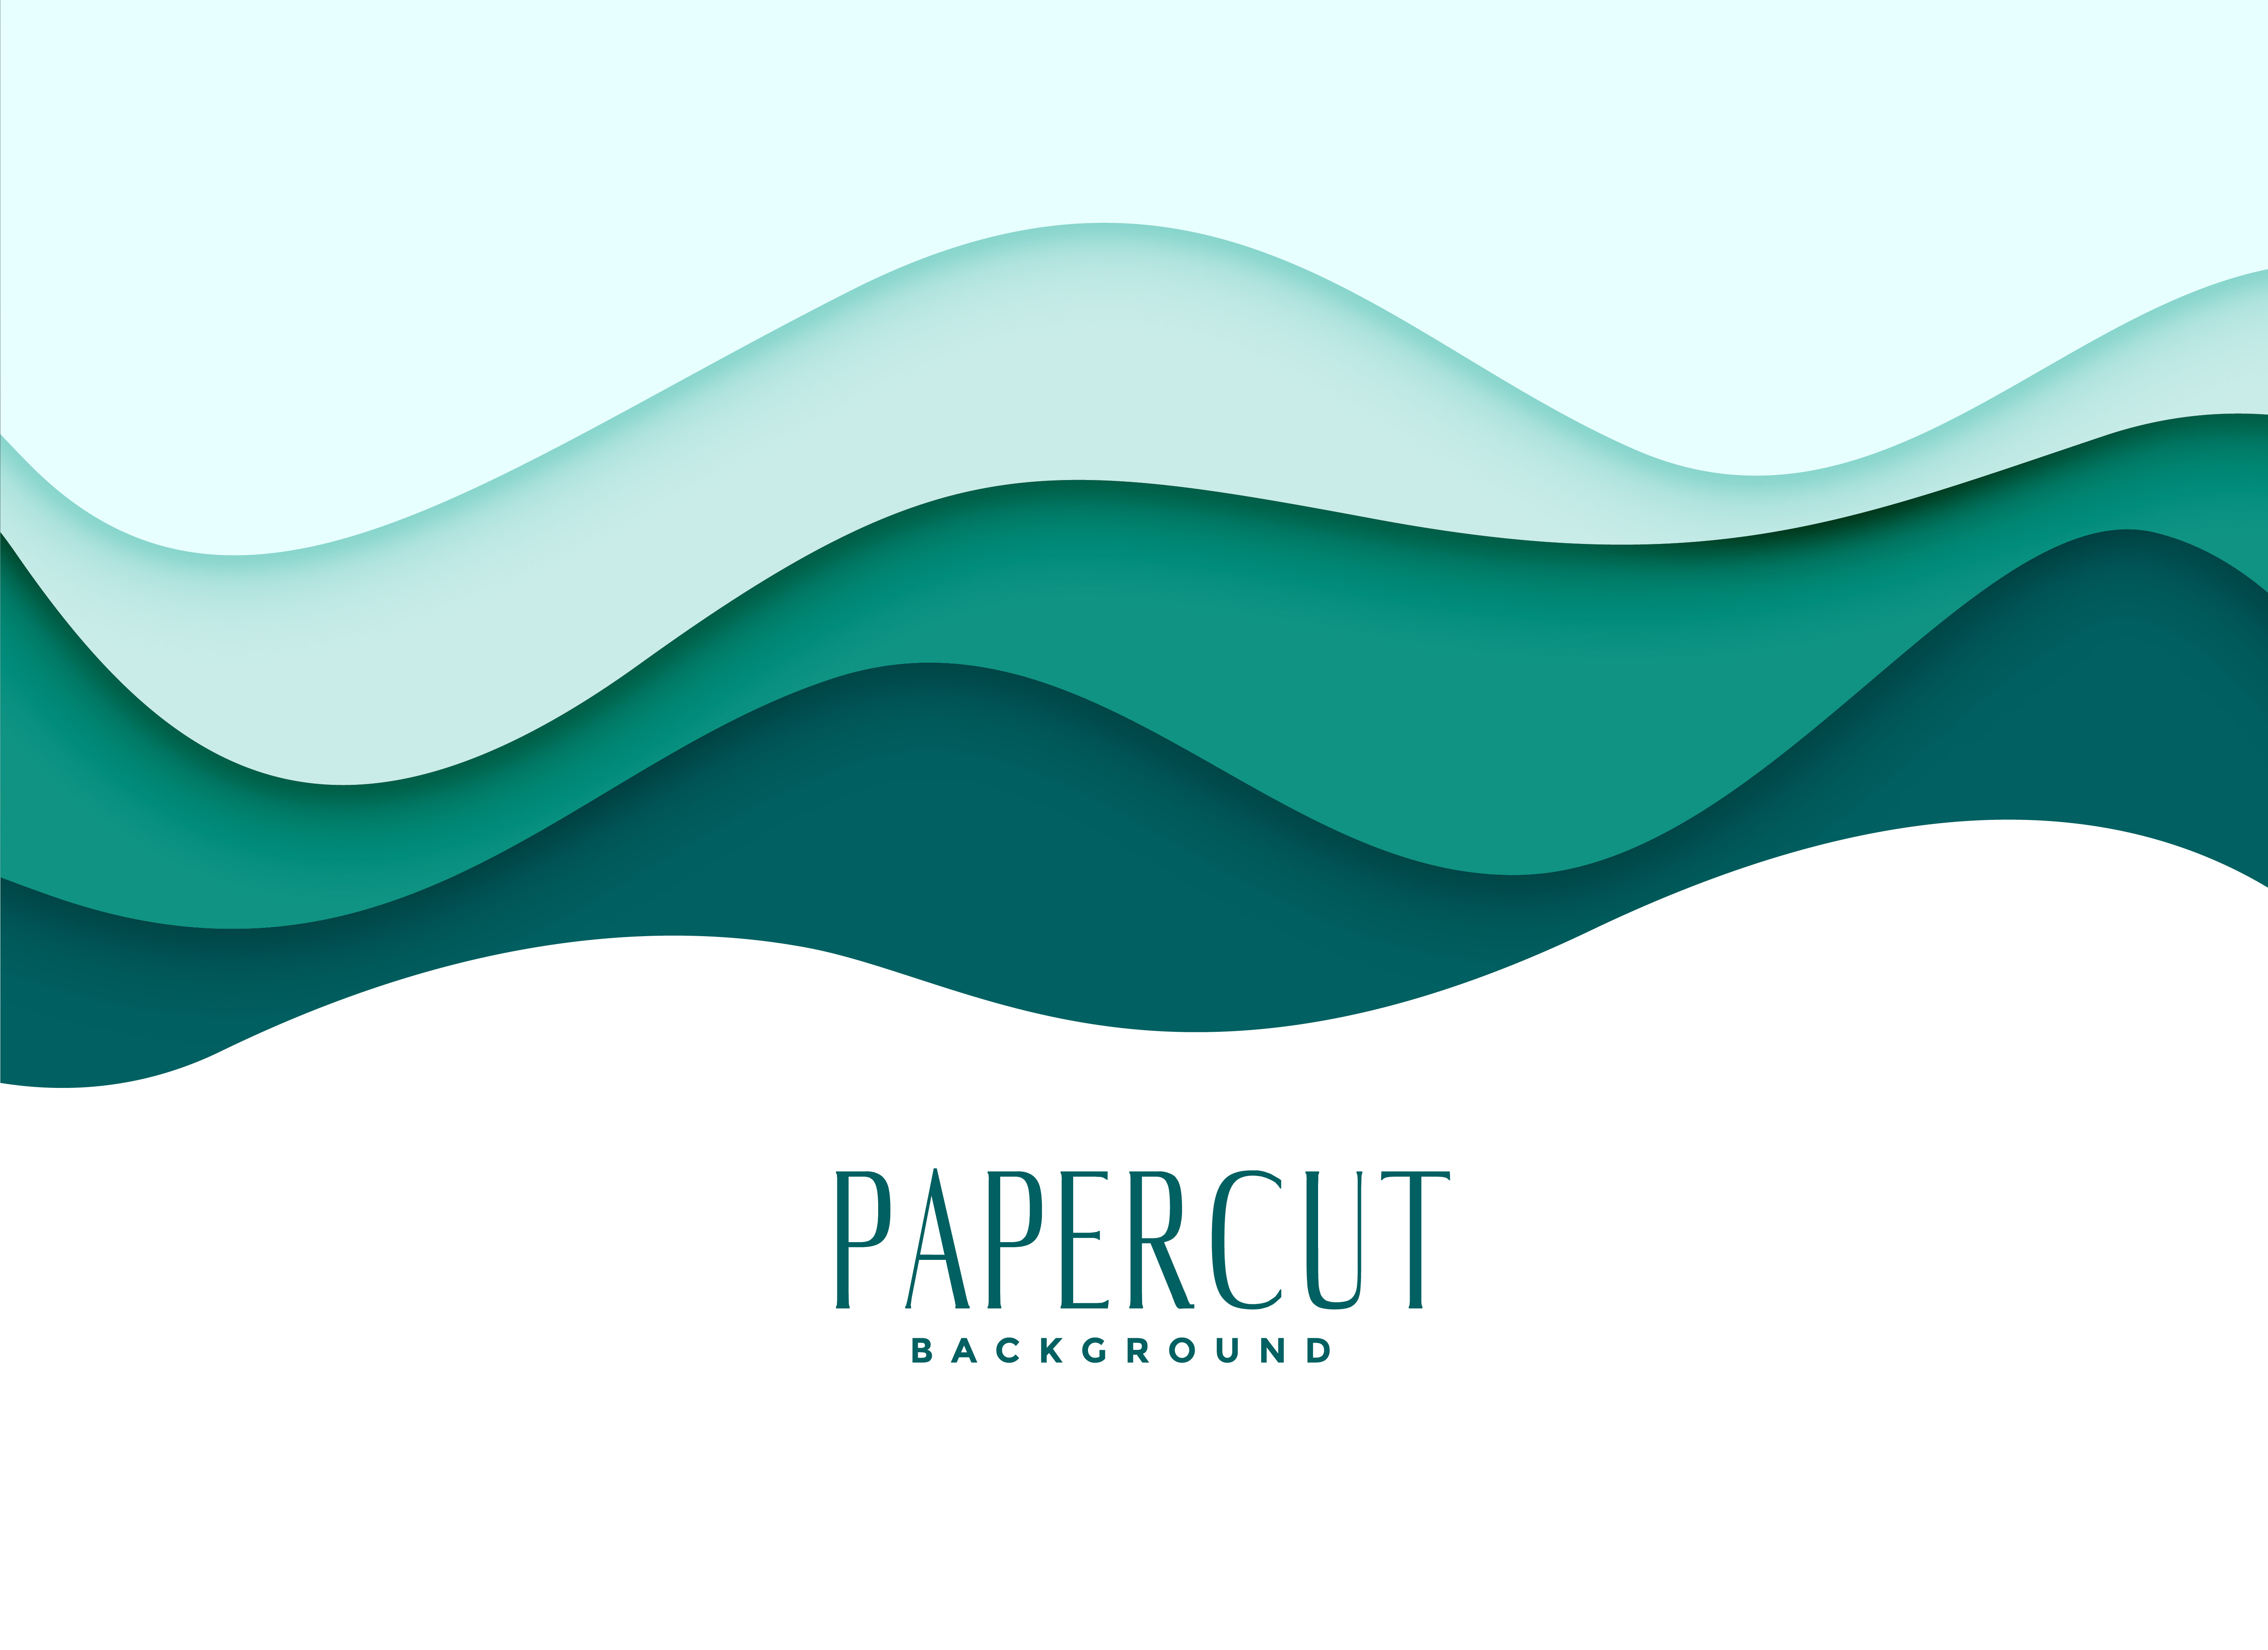 Download Papercut Free Vector Art - (19,073 Free Downloads)